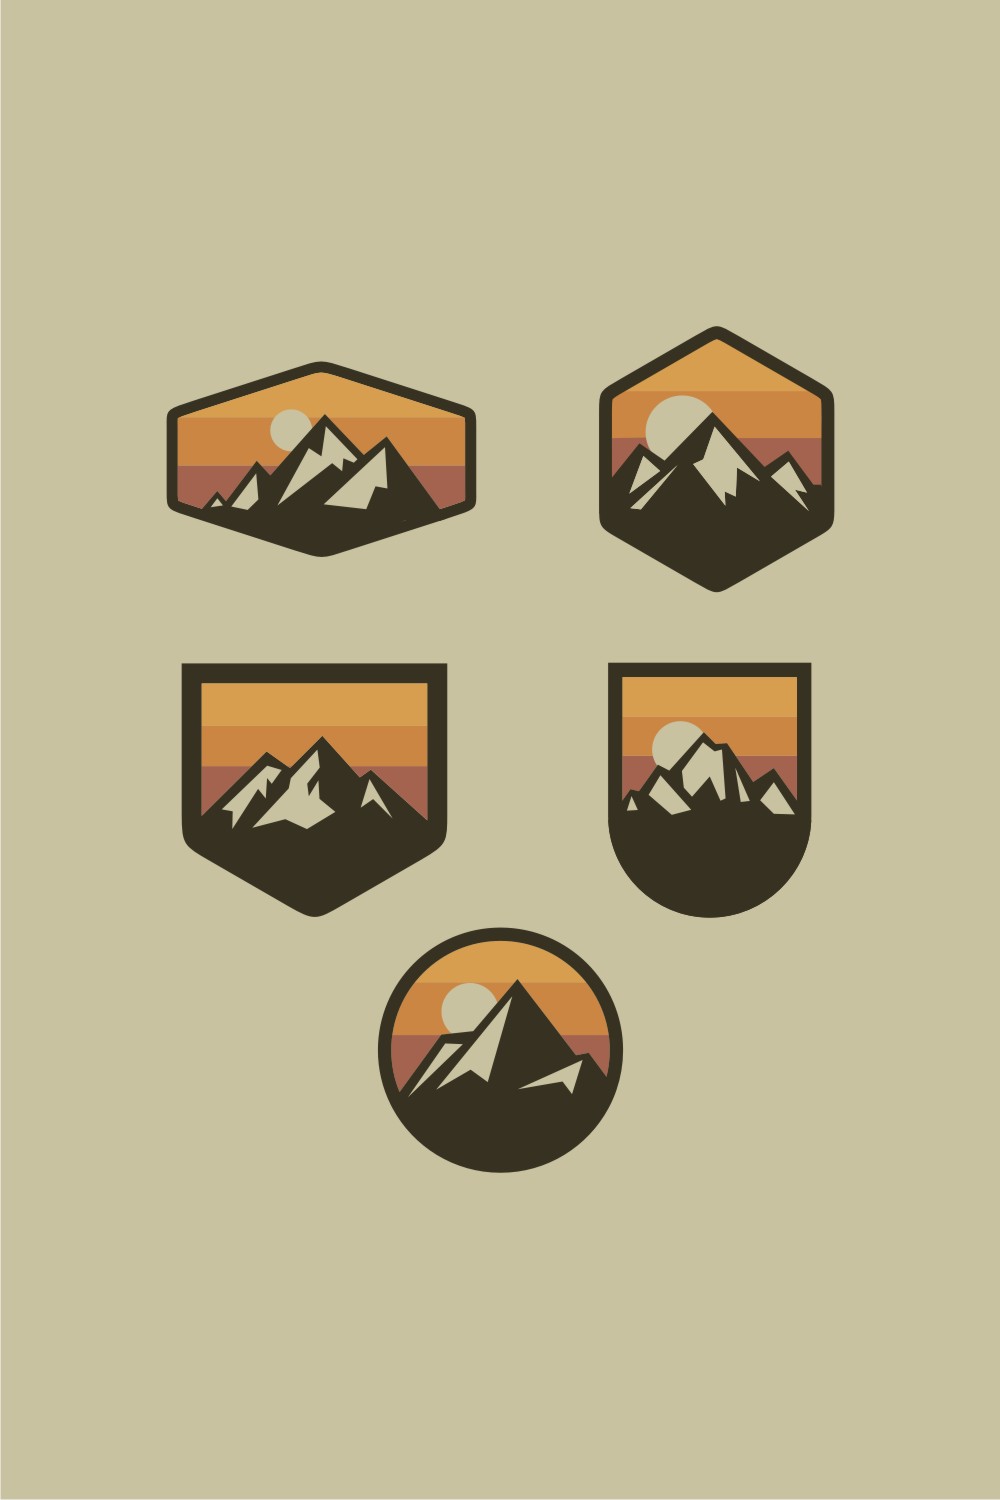 Beautiful Mountain Logo Set Pinterest Image.